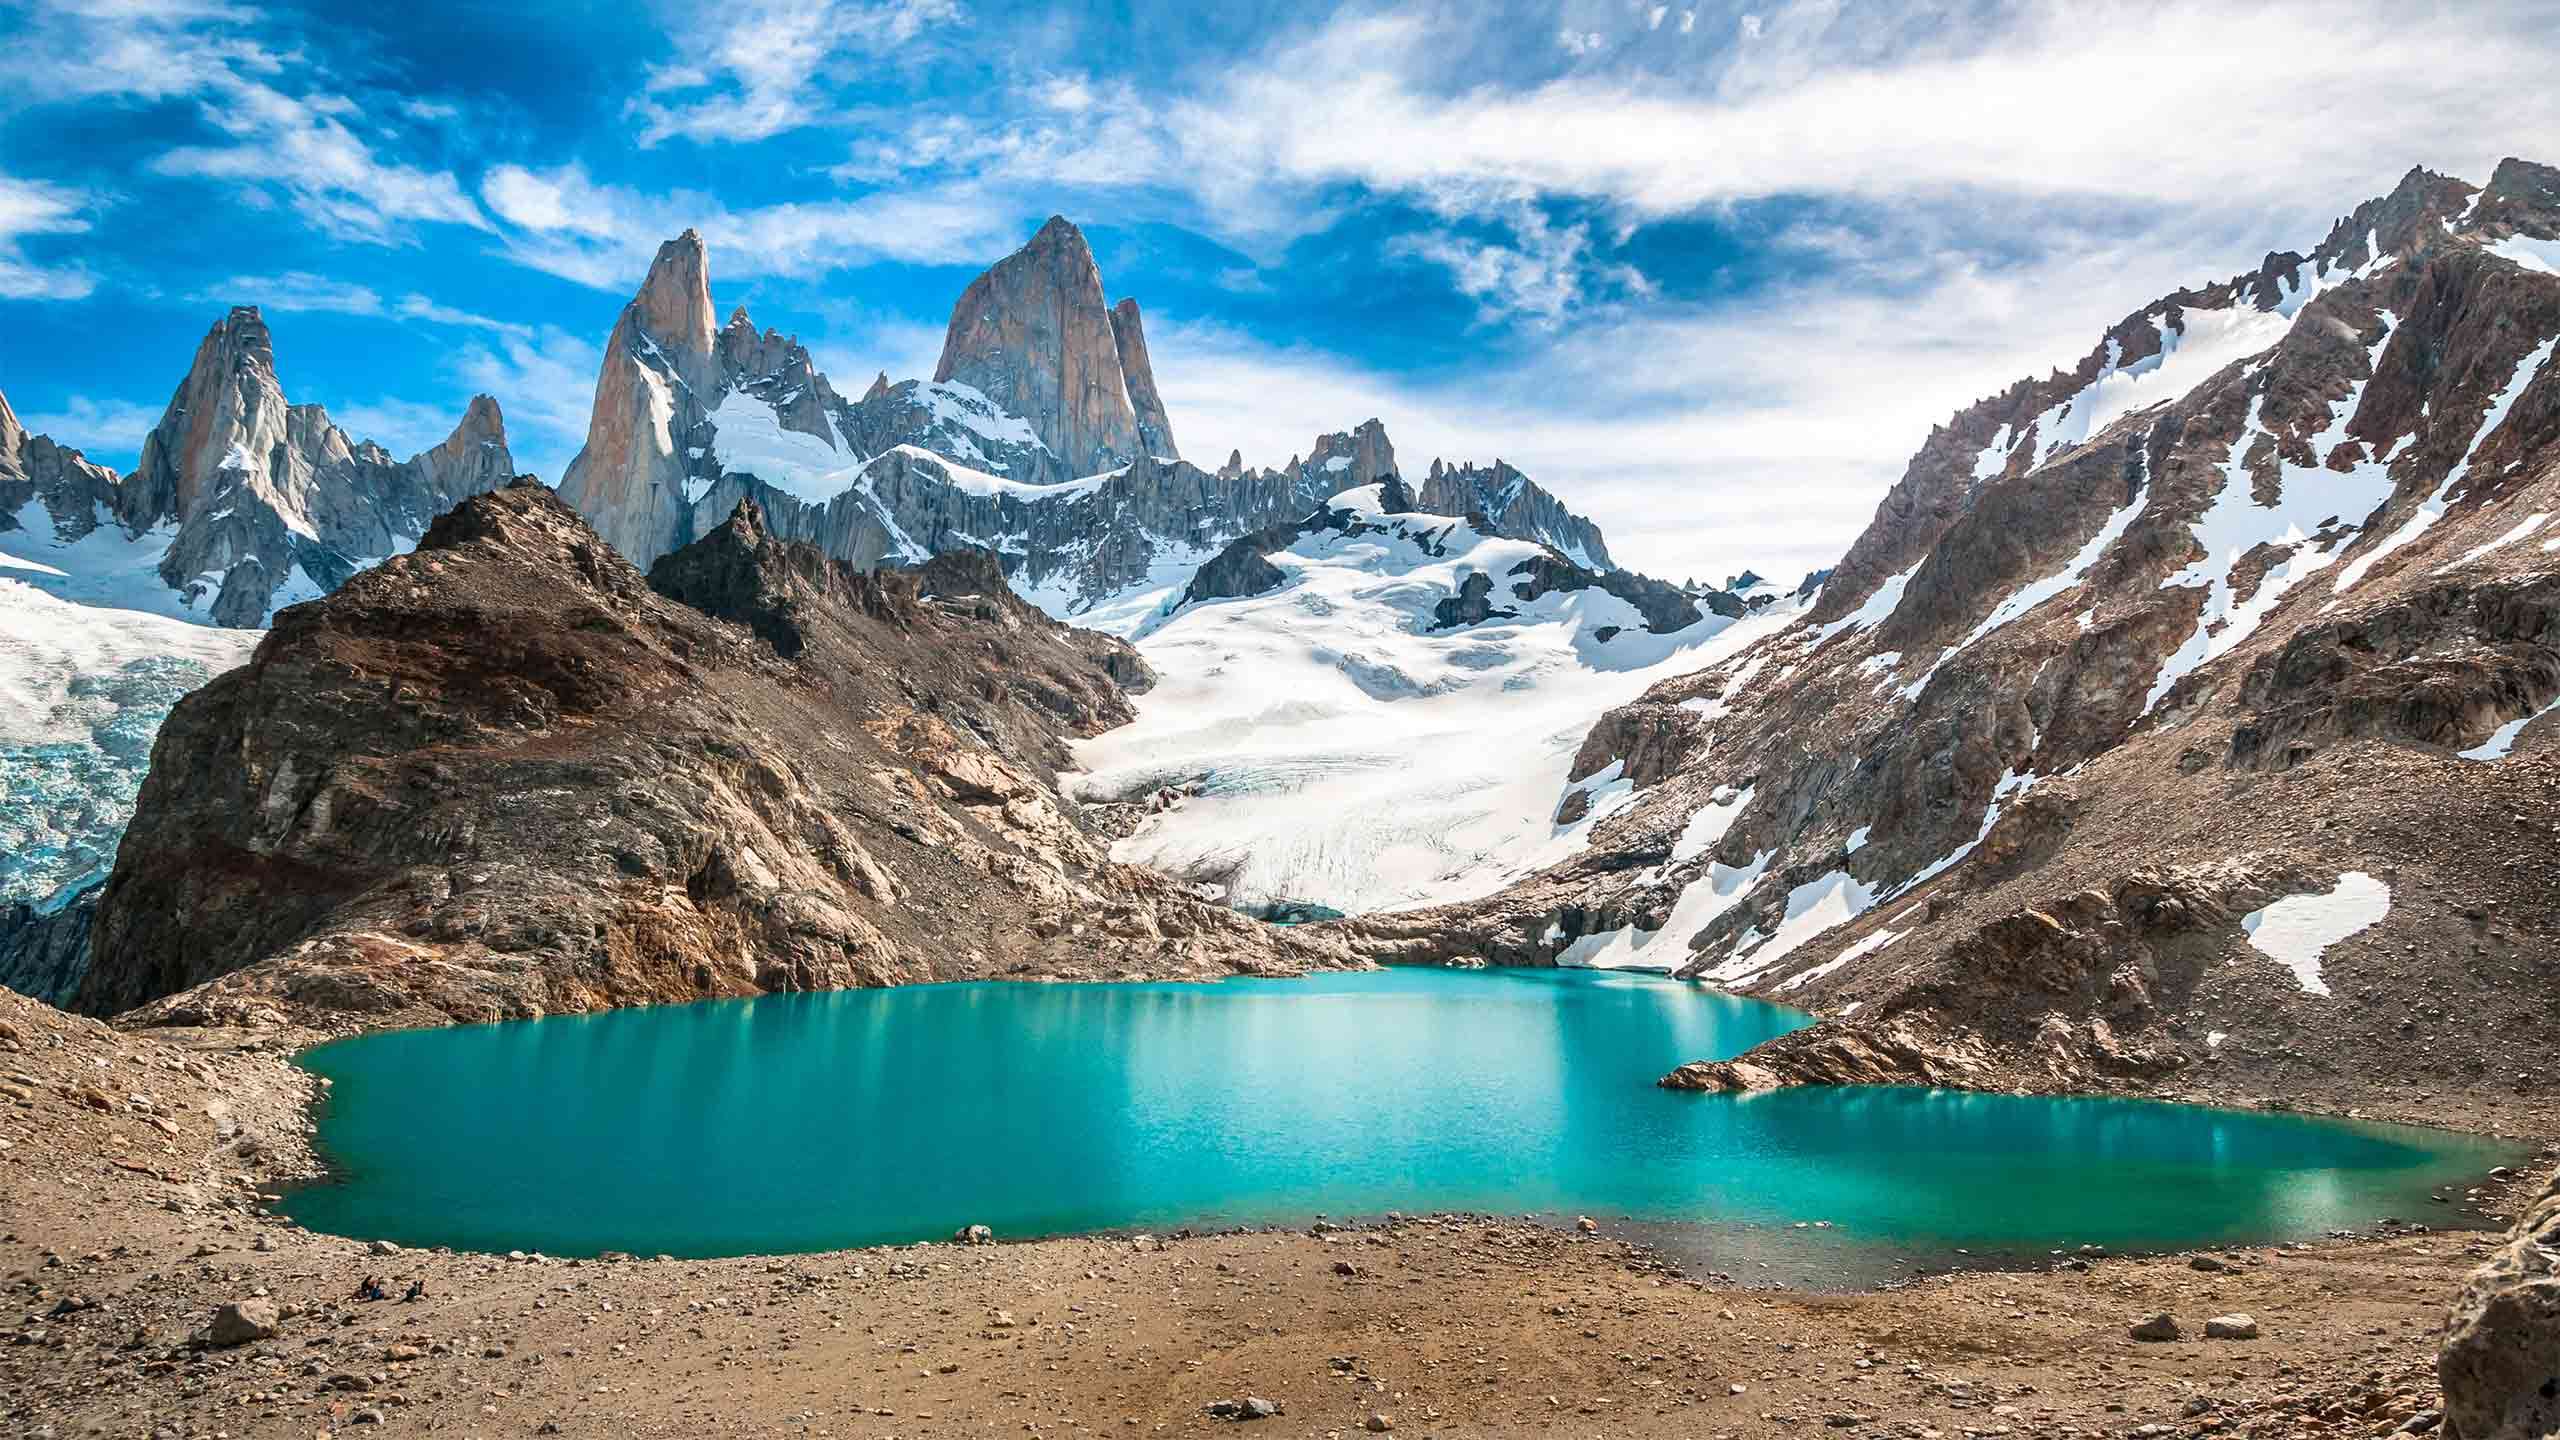 Luxury Argentina's Patagonia Walk 8D7N (Epic Lakes, Peaks & Glaciers), Fully Guided